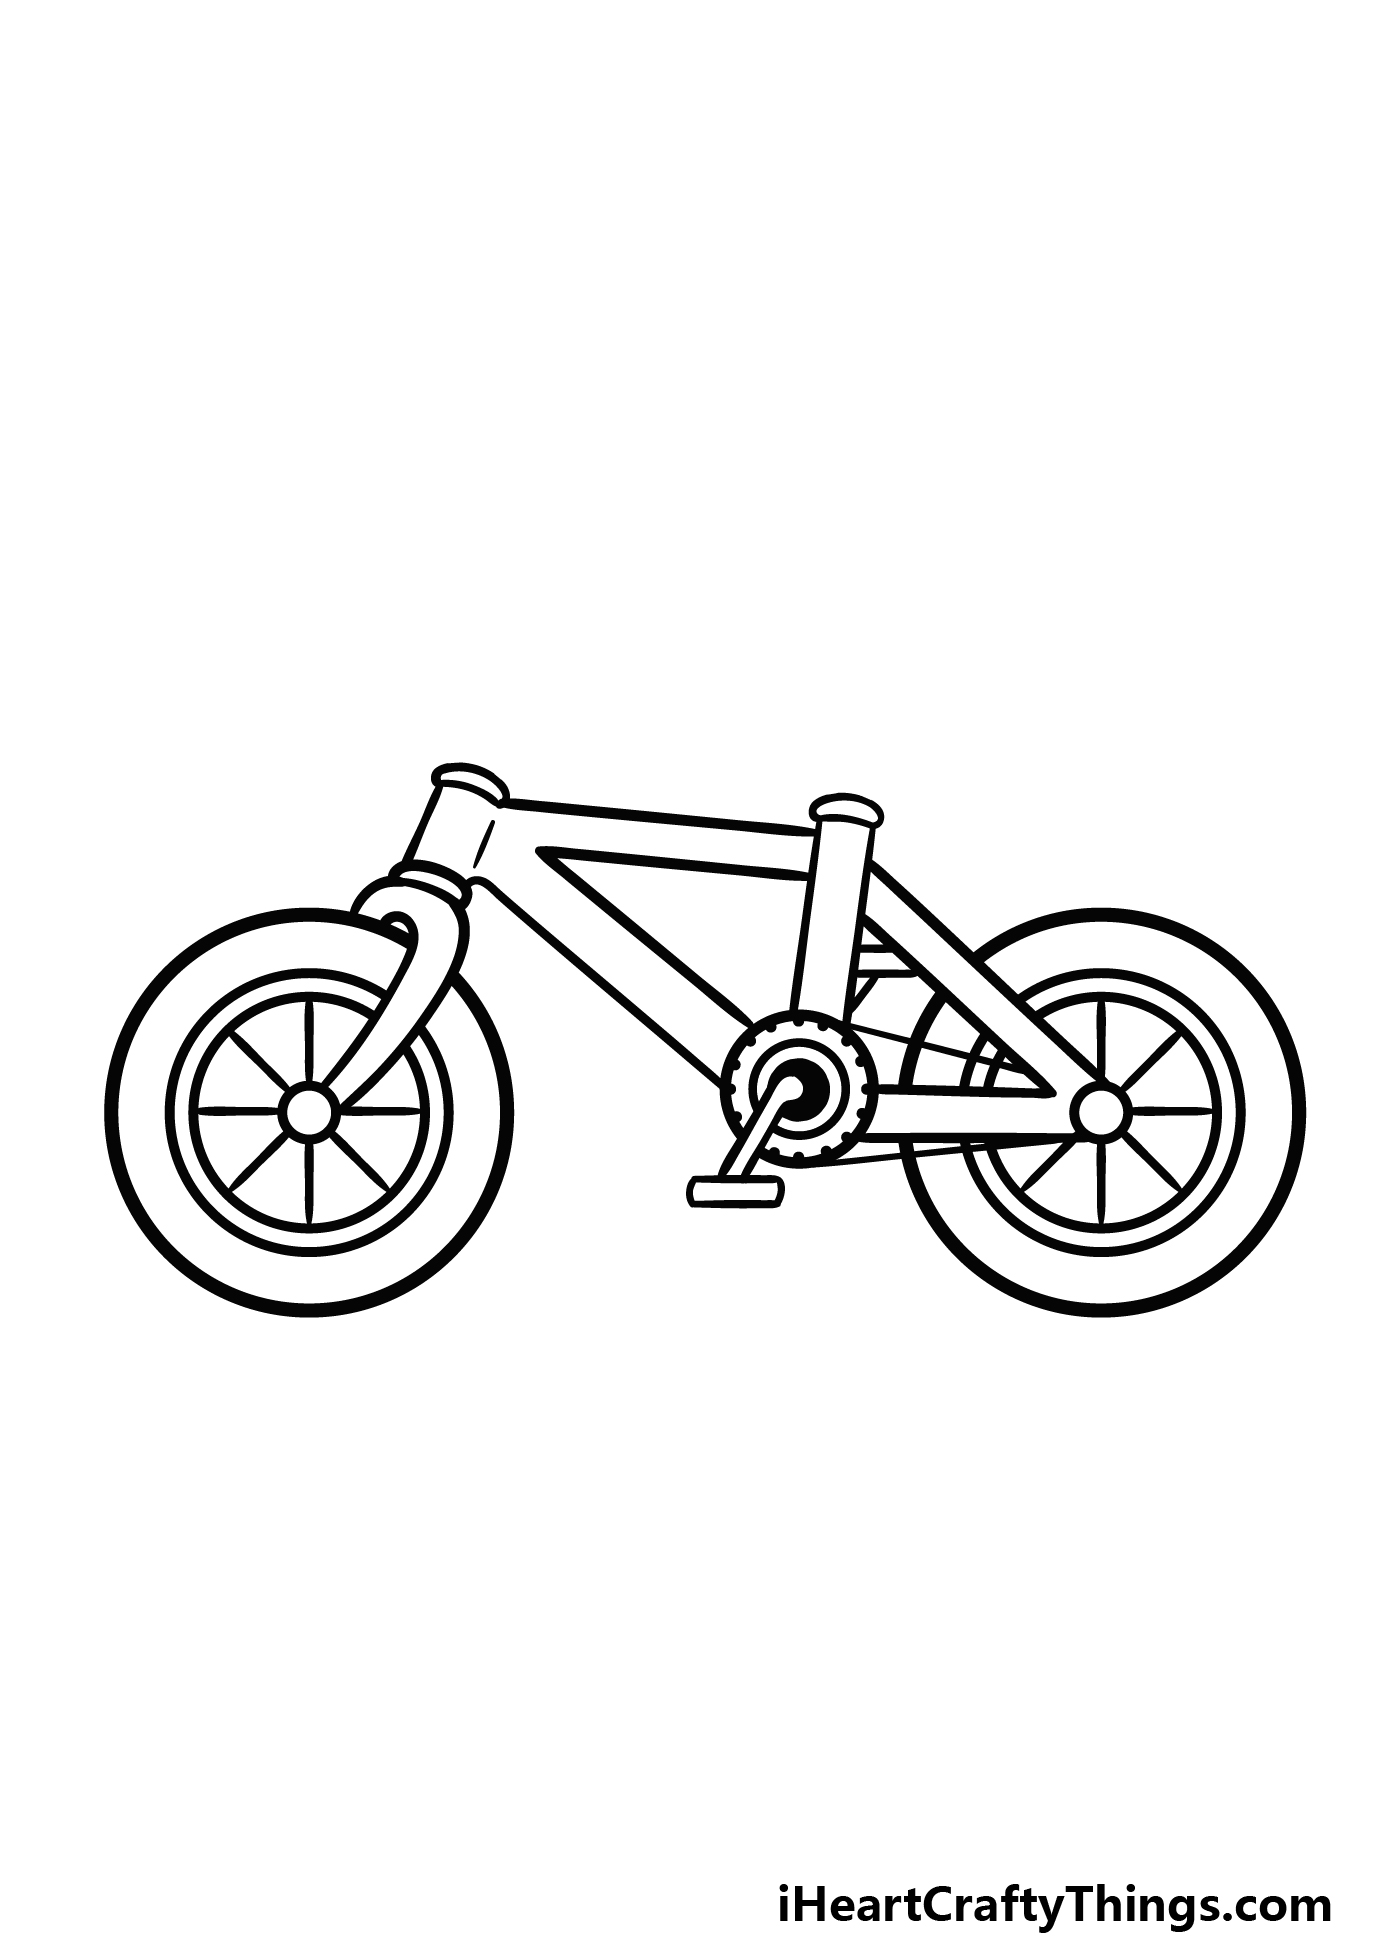 how to draw a cartoon bike step 4